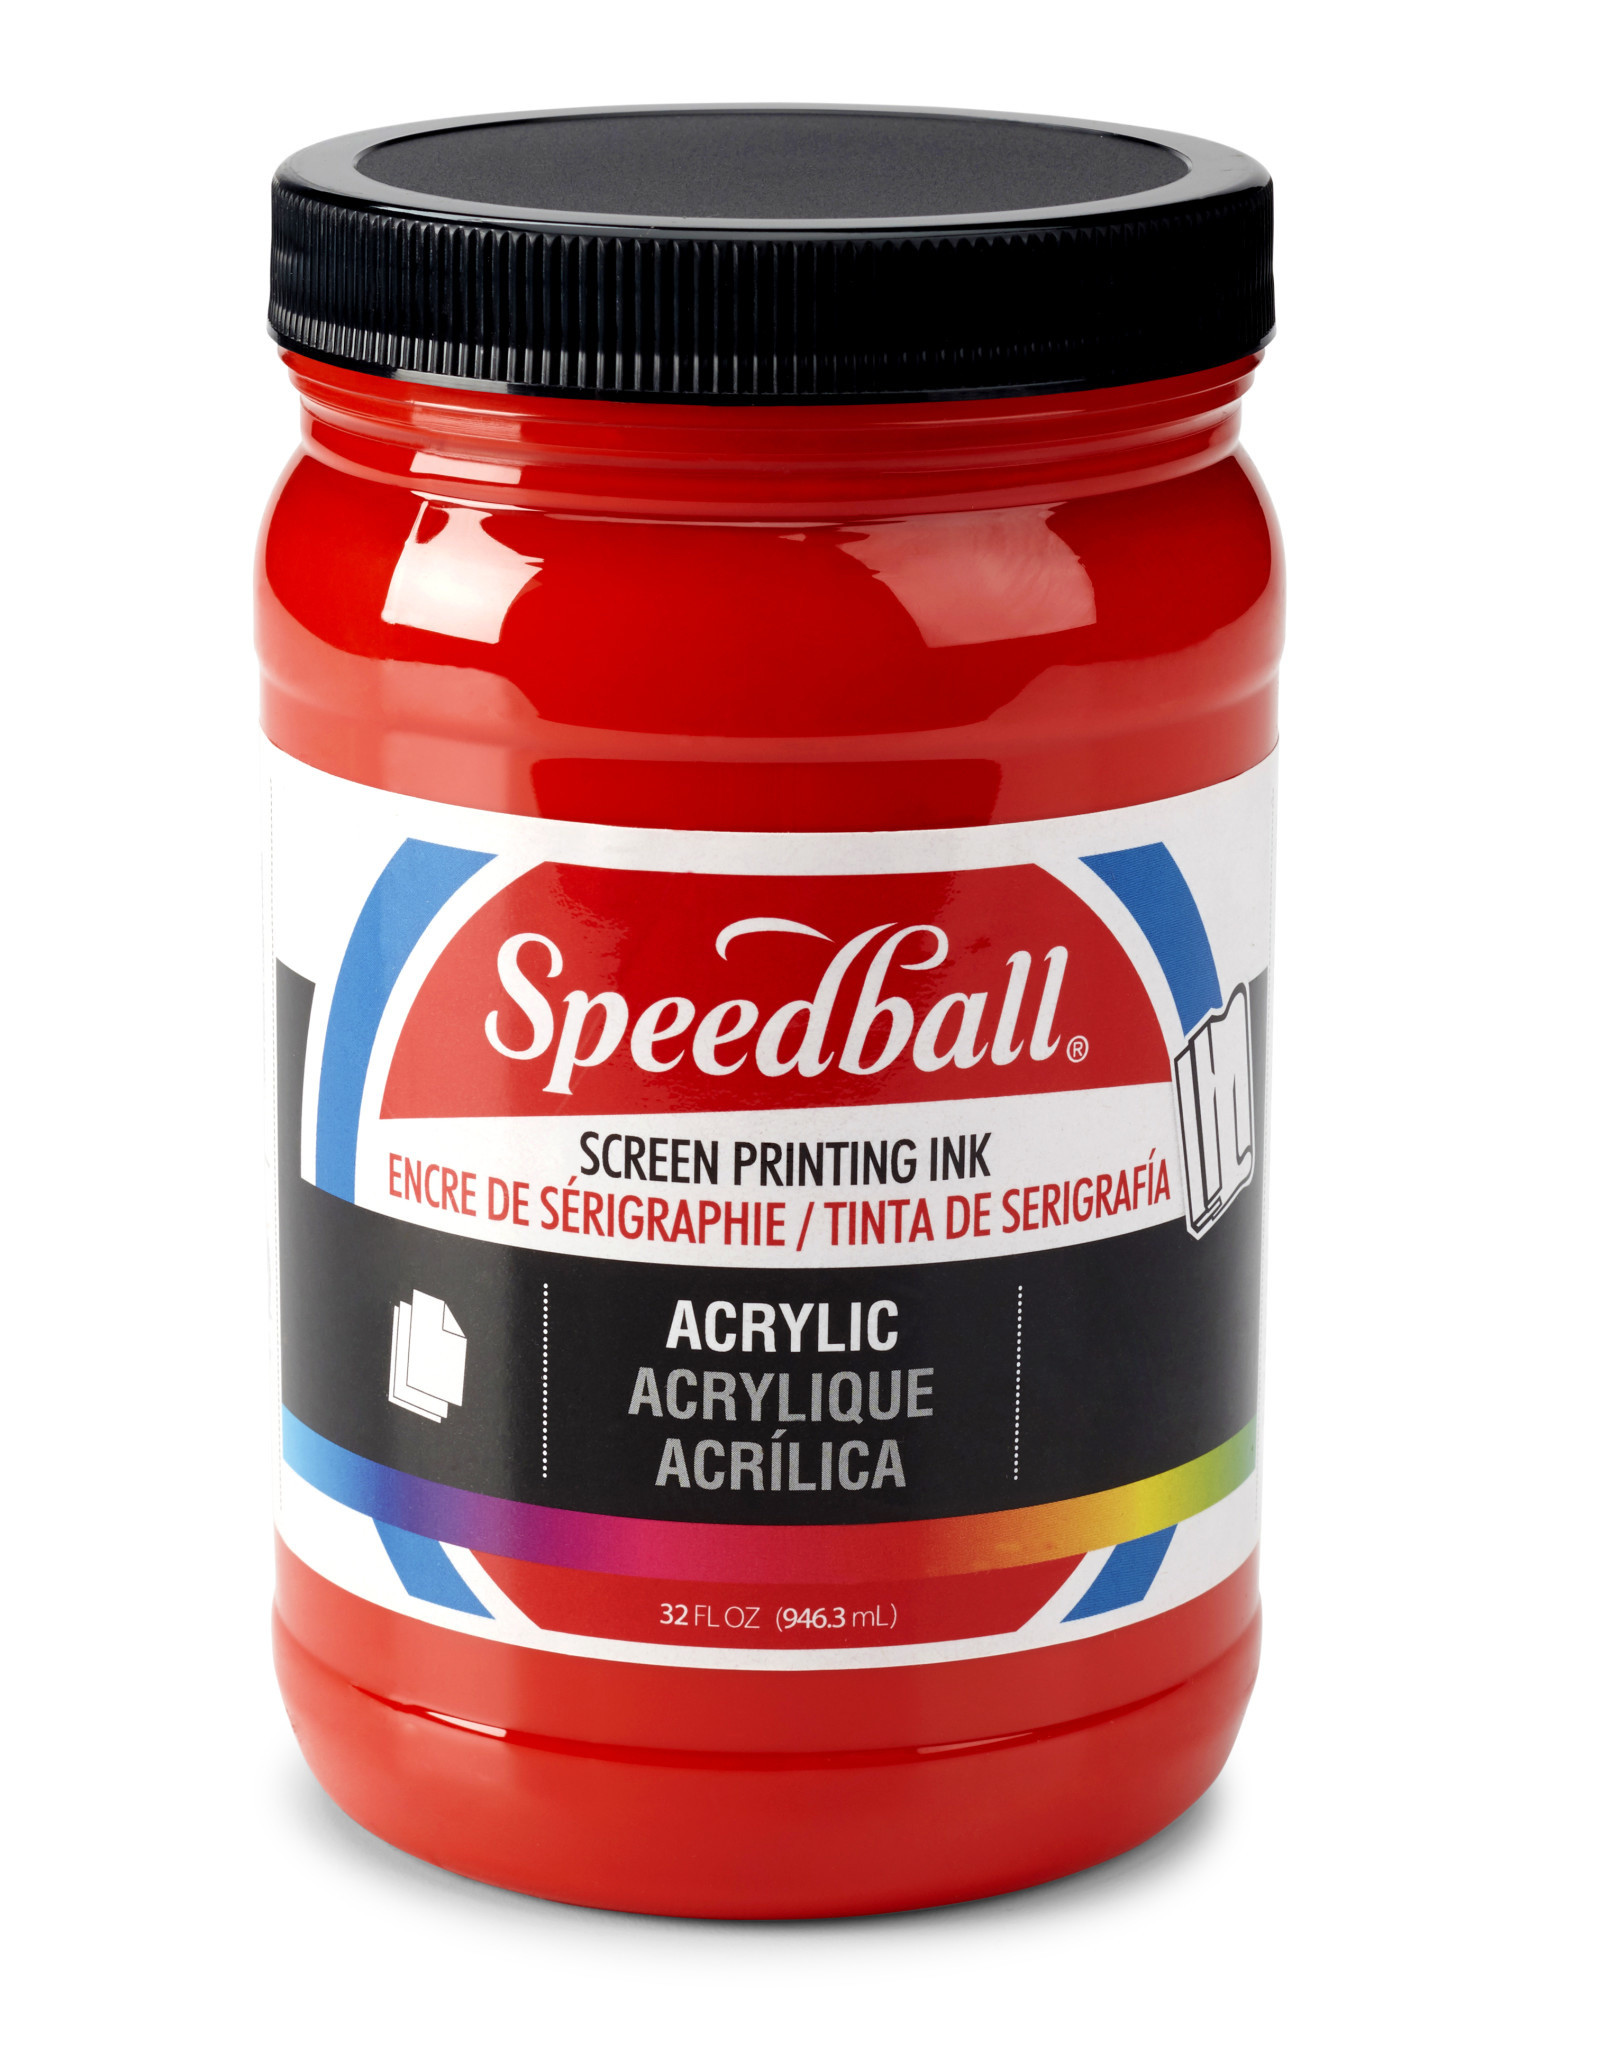 SPEEDBALL ART PRODUCTS Speedball Acrylic Screen Printing Ink, Medium Red, 32oz